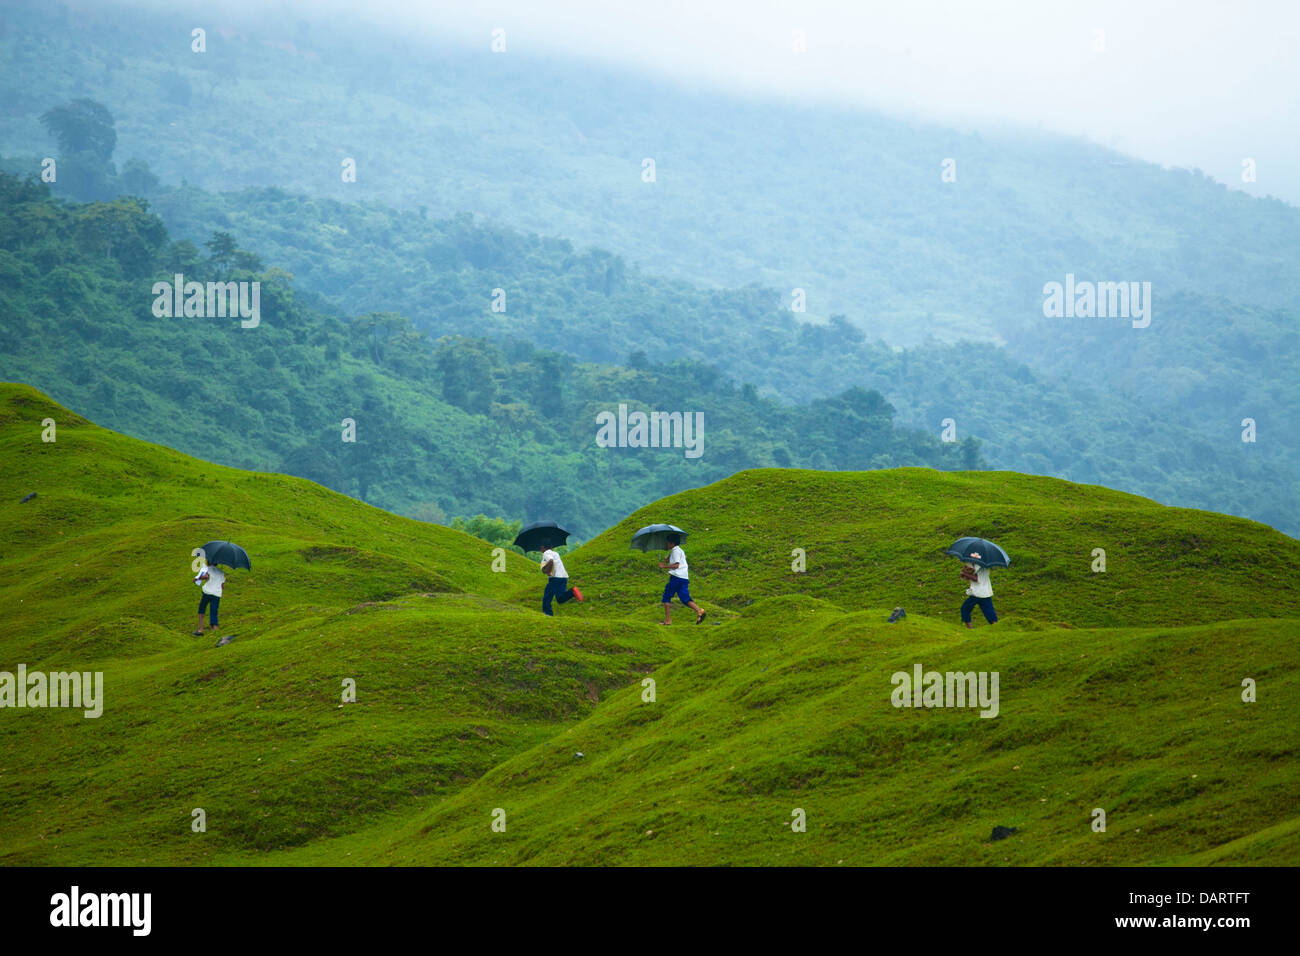 school-children-are-climbing-on-hills-at-shunamgonj-stock-photo-alamy